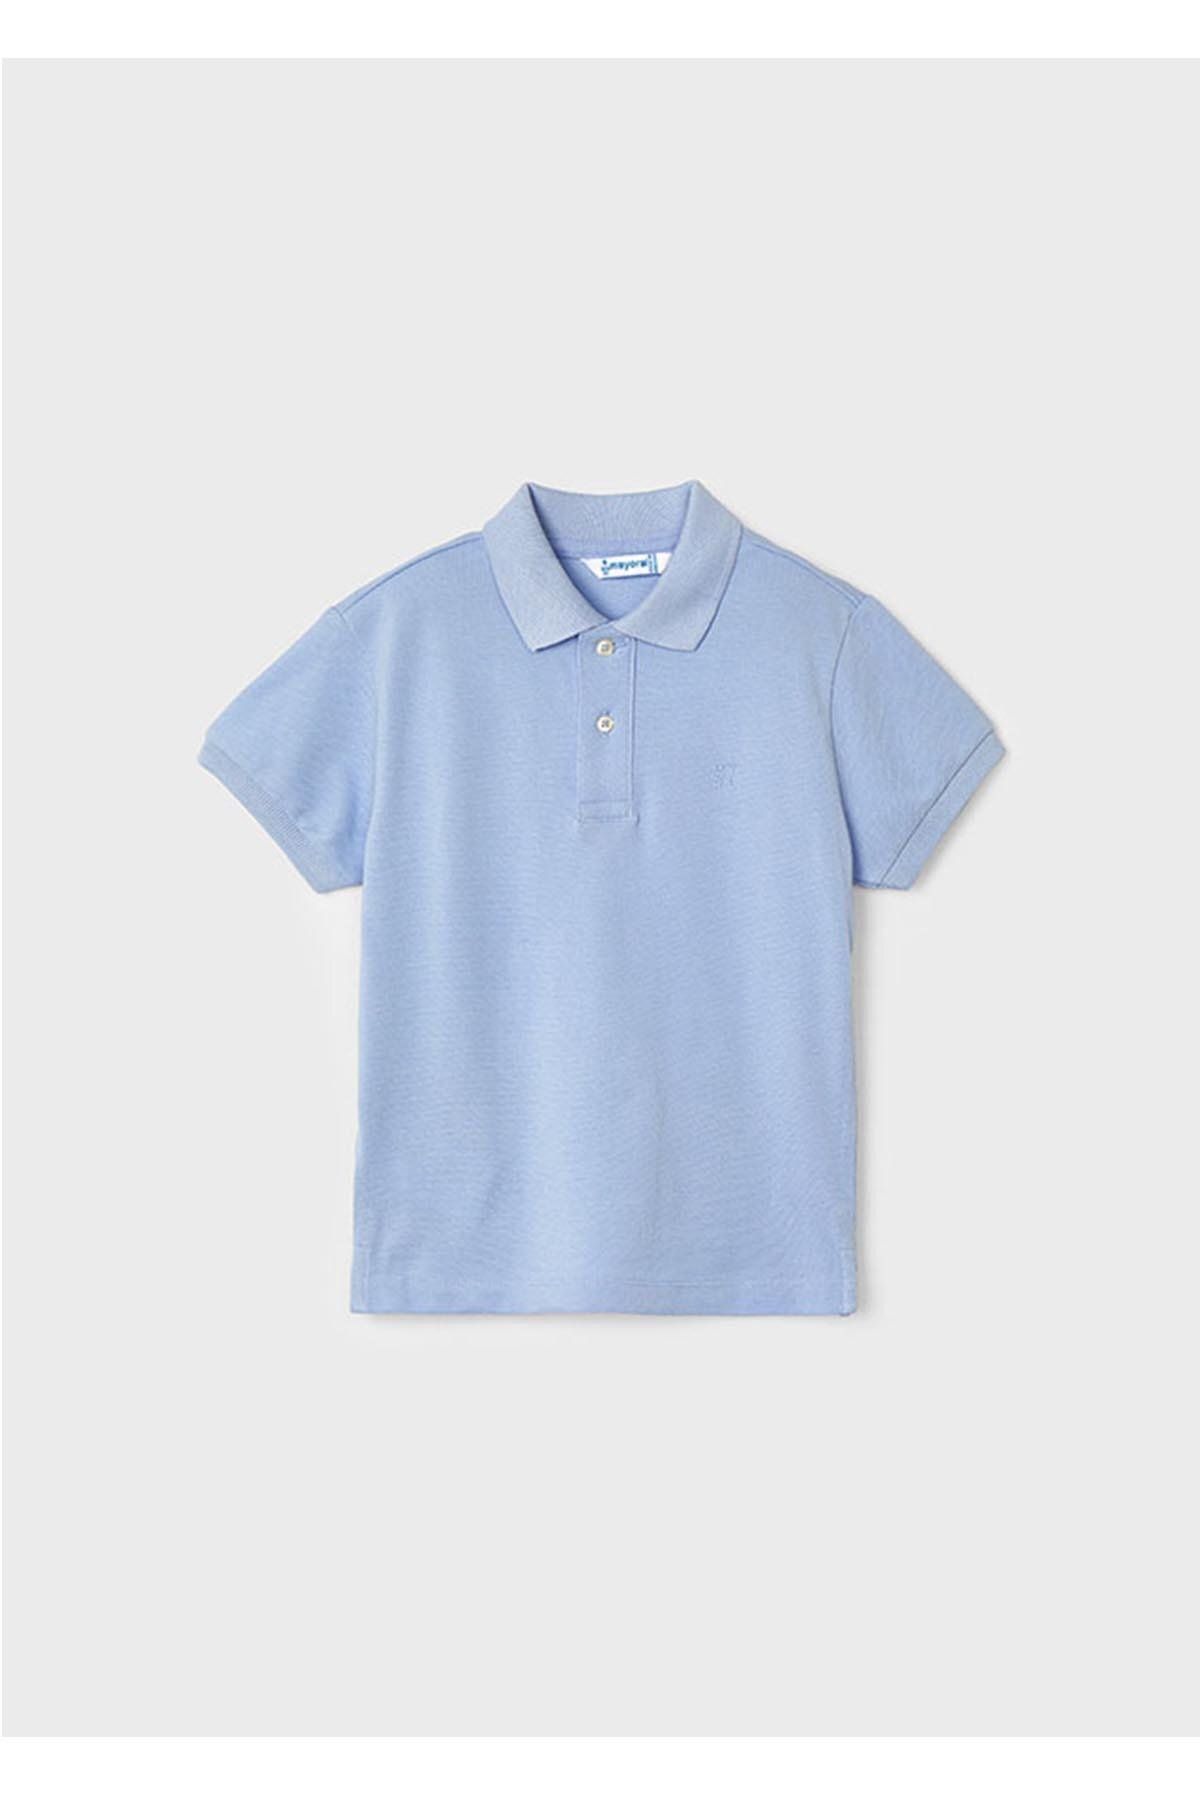 Mayoral Yazlık Erkek Kısa Kol Basic T-shirt - Mavi